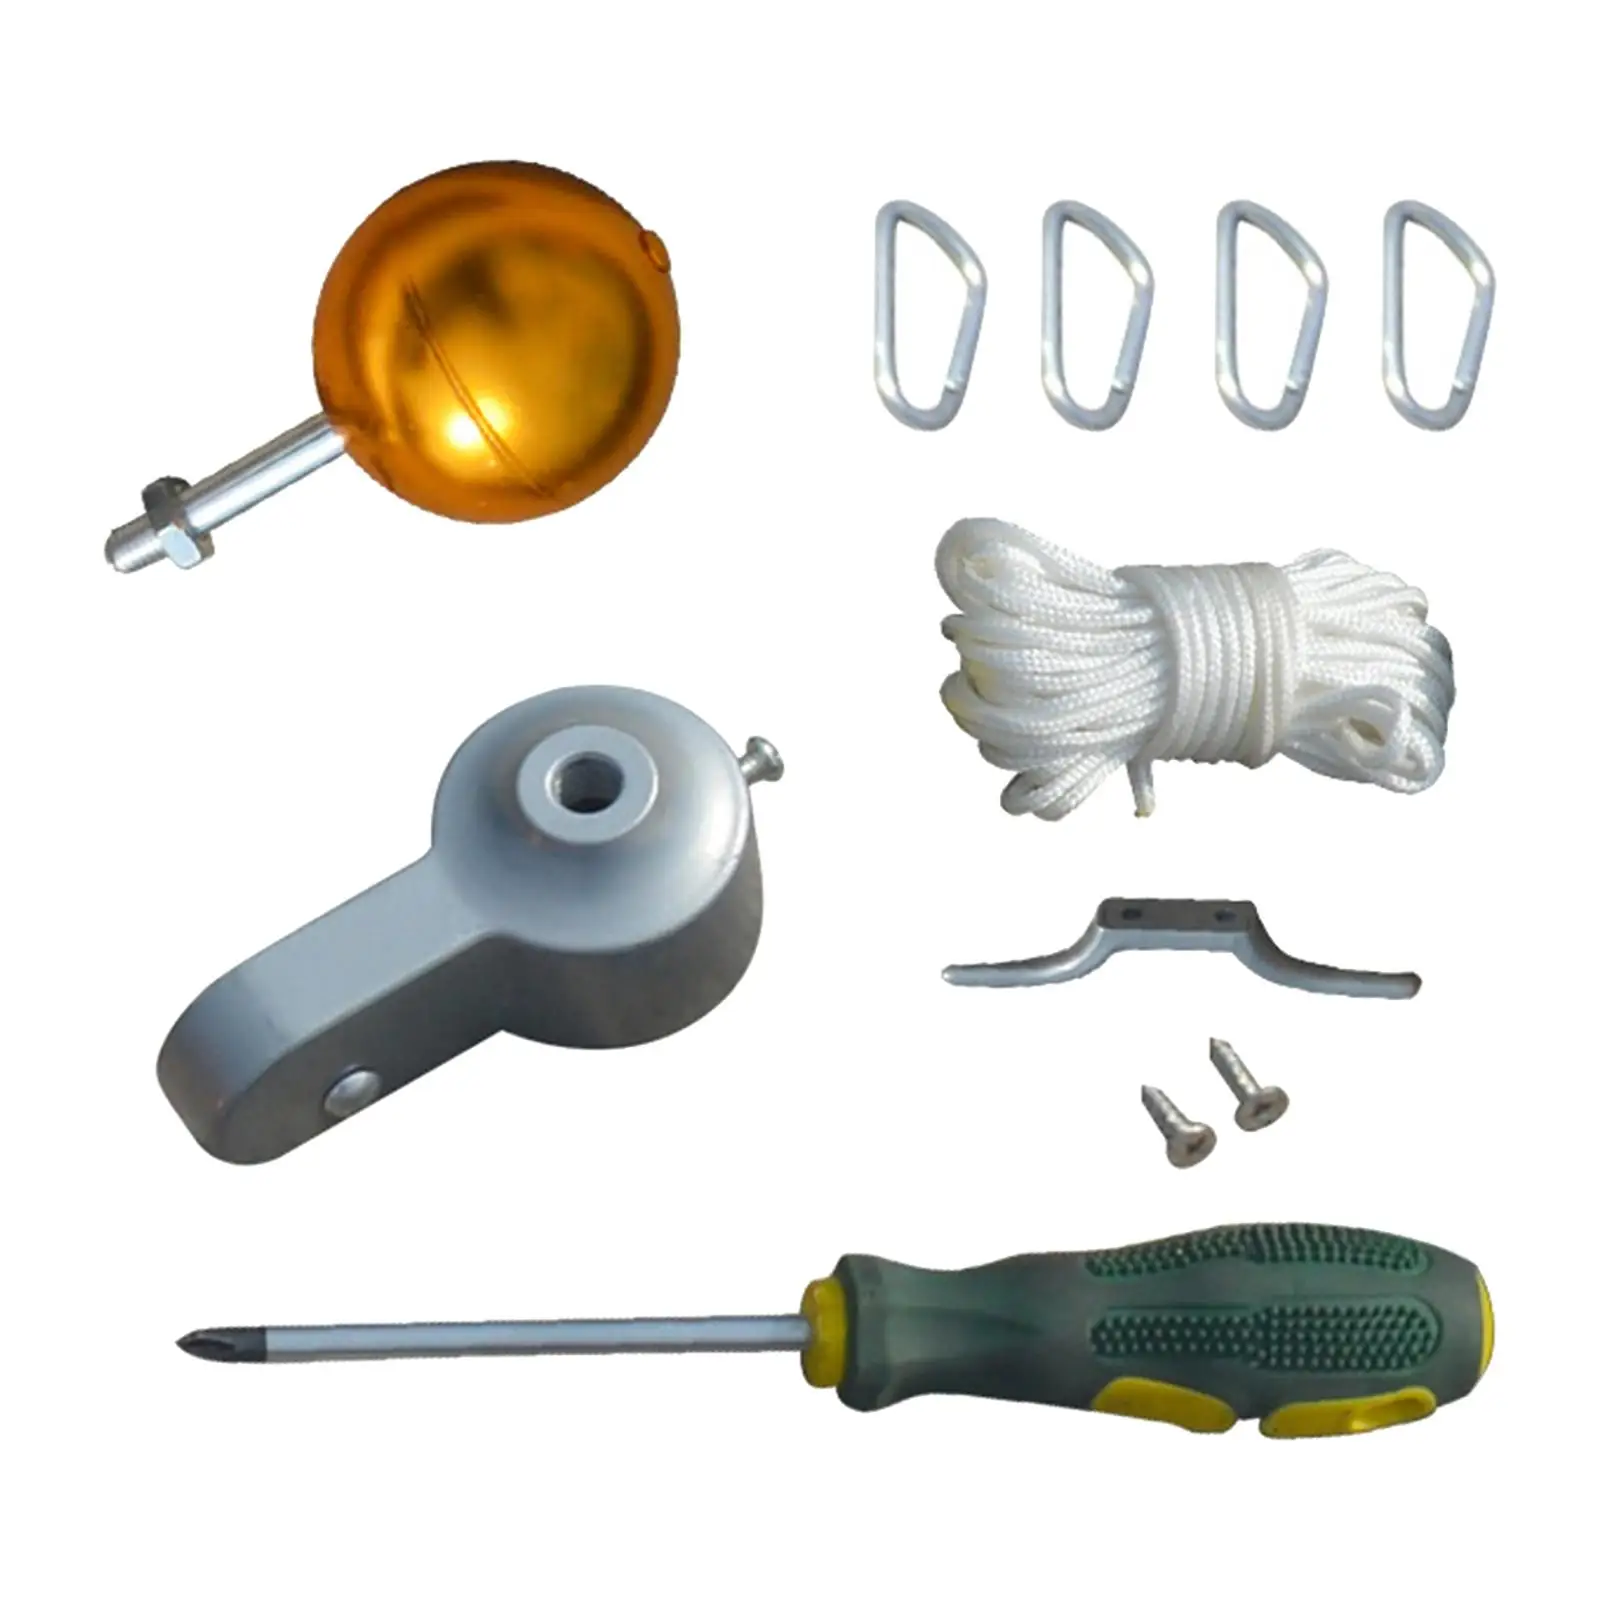 Flagpole Accessories, Flag Pole Repair Kit Repair Kits, Pulley Gold Ball, Cleat Clip Screws Decor, Braided Rope, Screws Premium